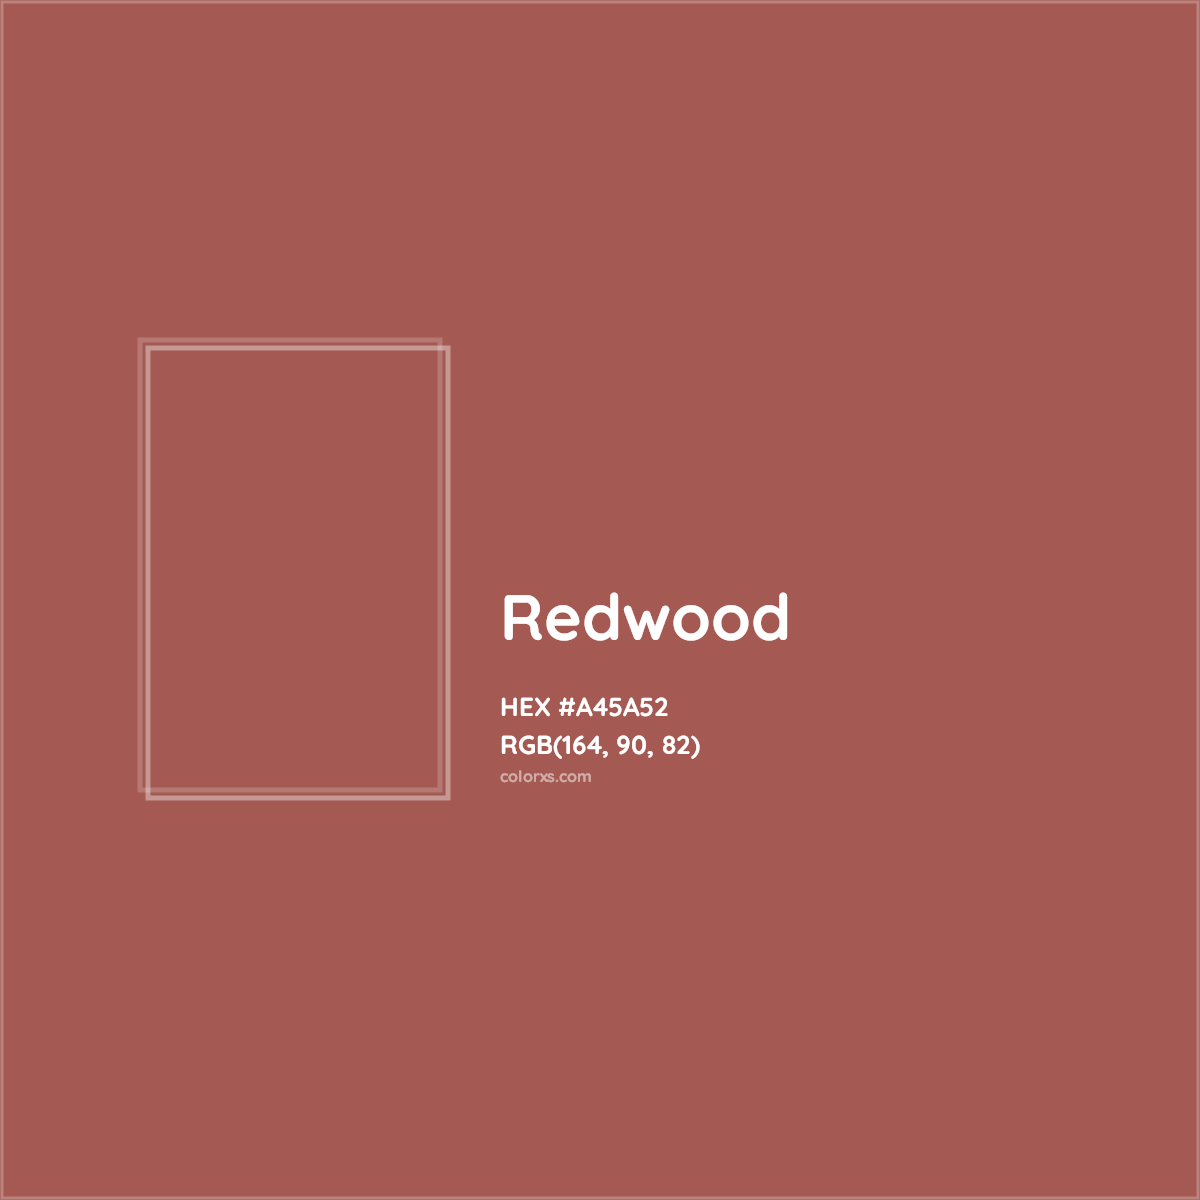 HEX #A45A52 Redwood Color - Color Code